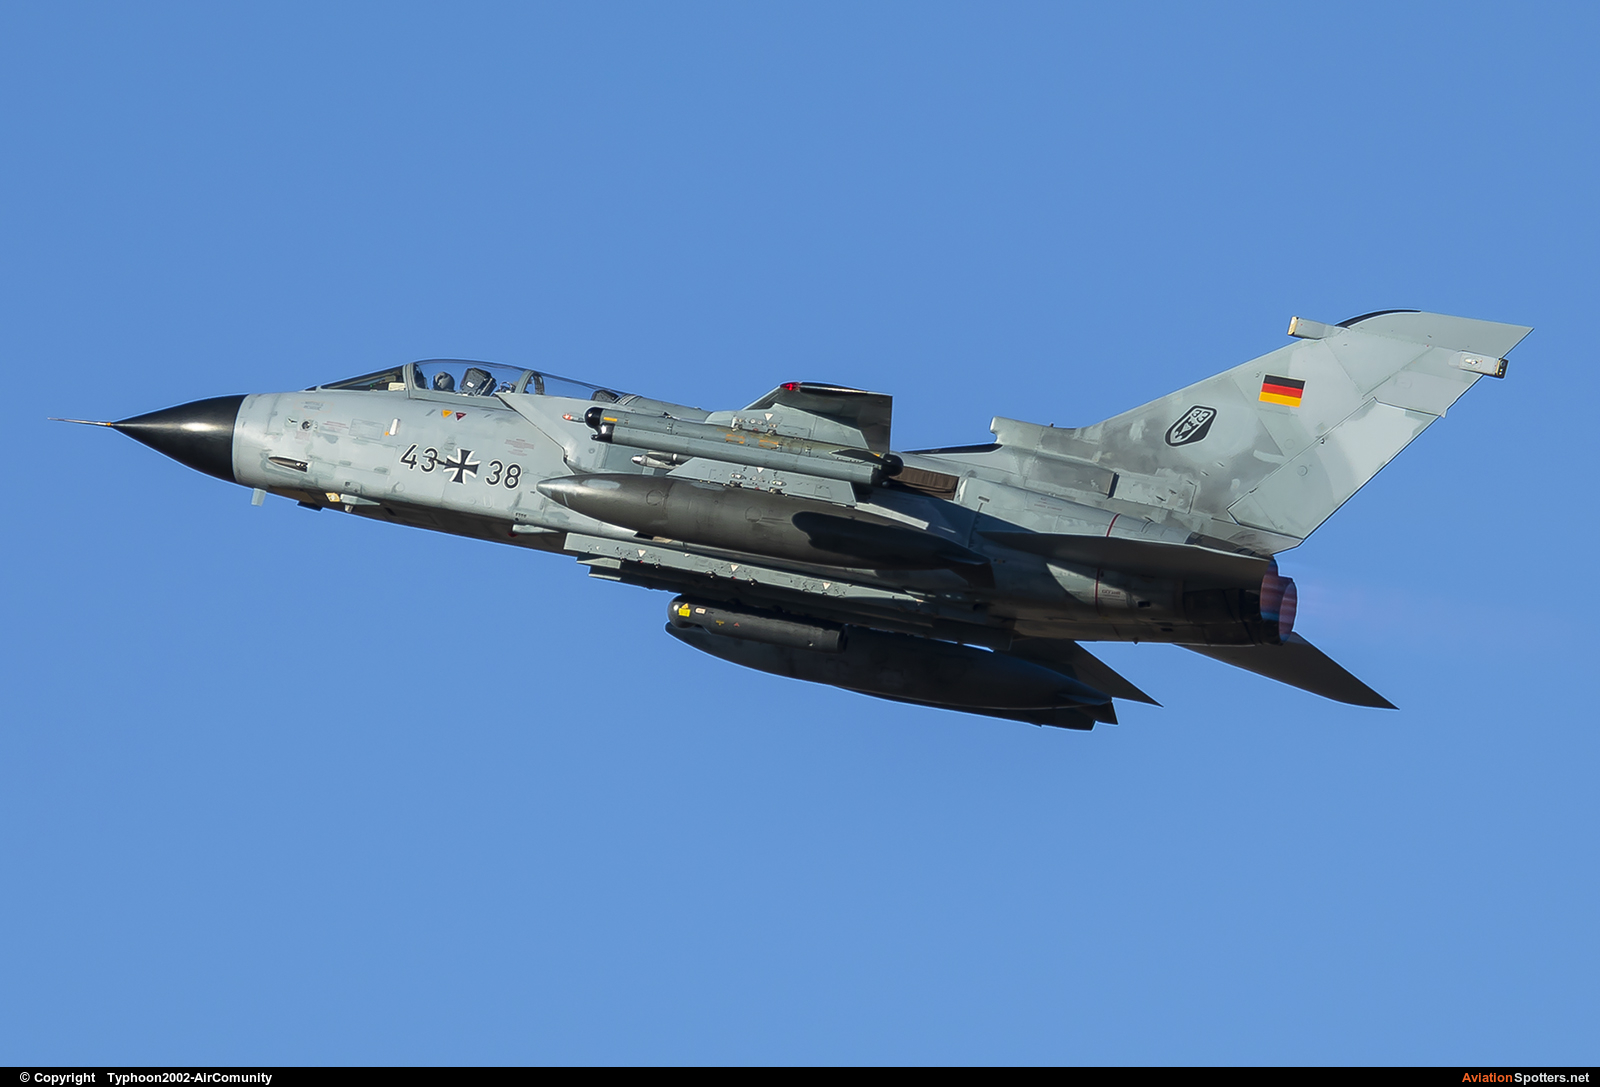 Germany - Air Force  -  Tornado - ECR  (43-38) By Typhoon2002-AirComunity (AirComunity)